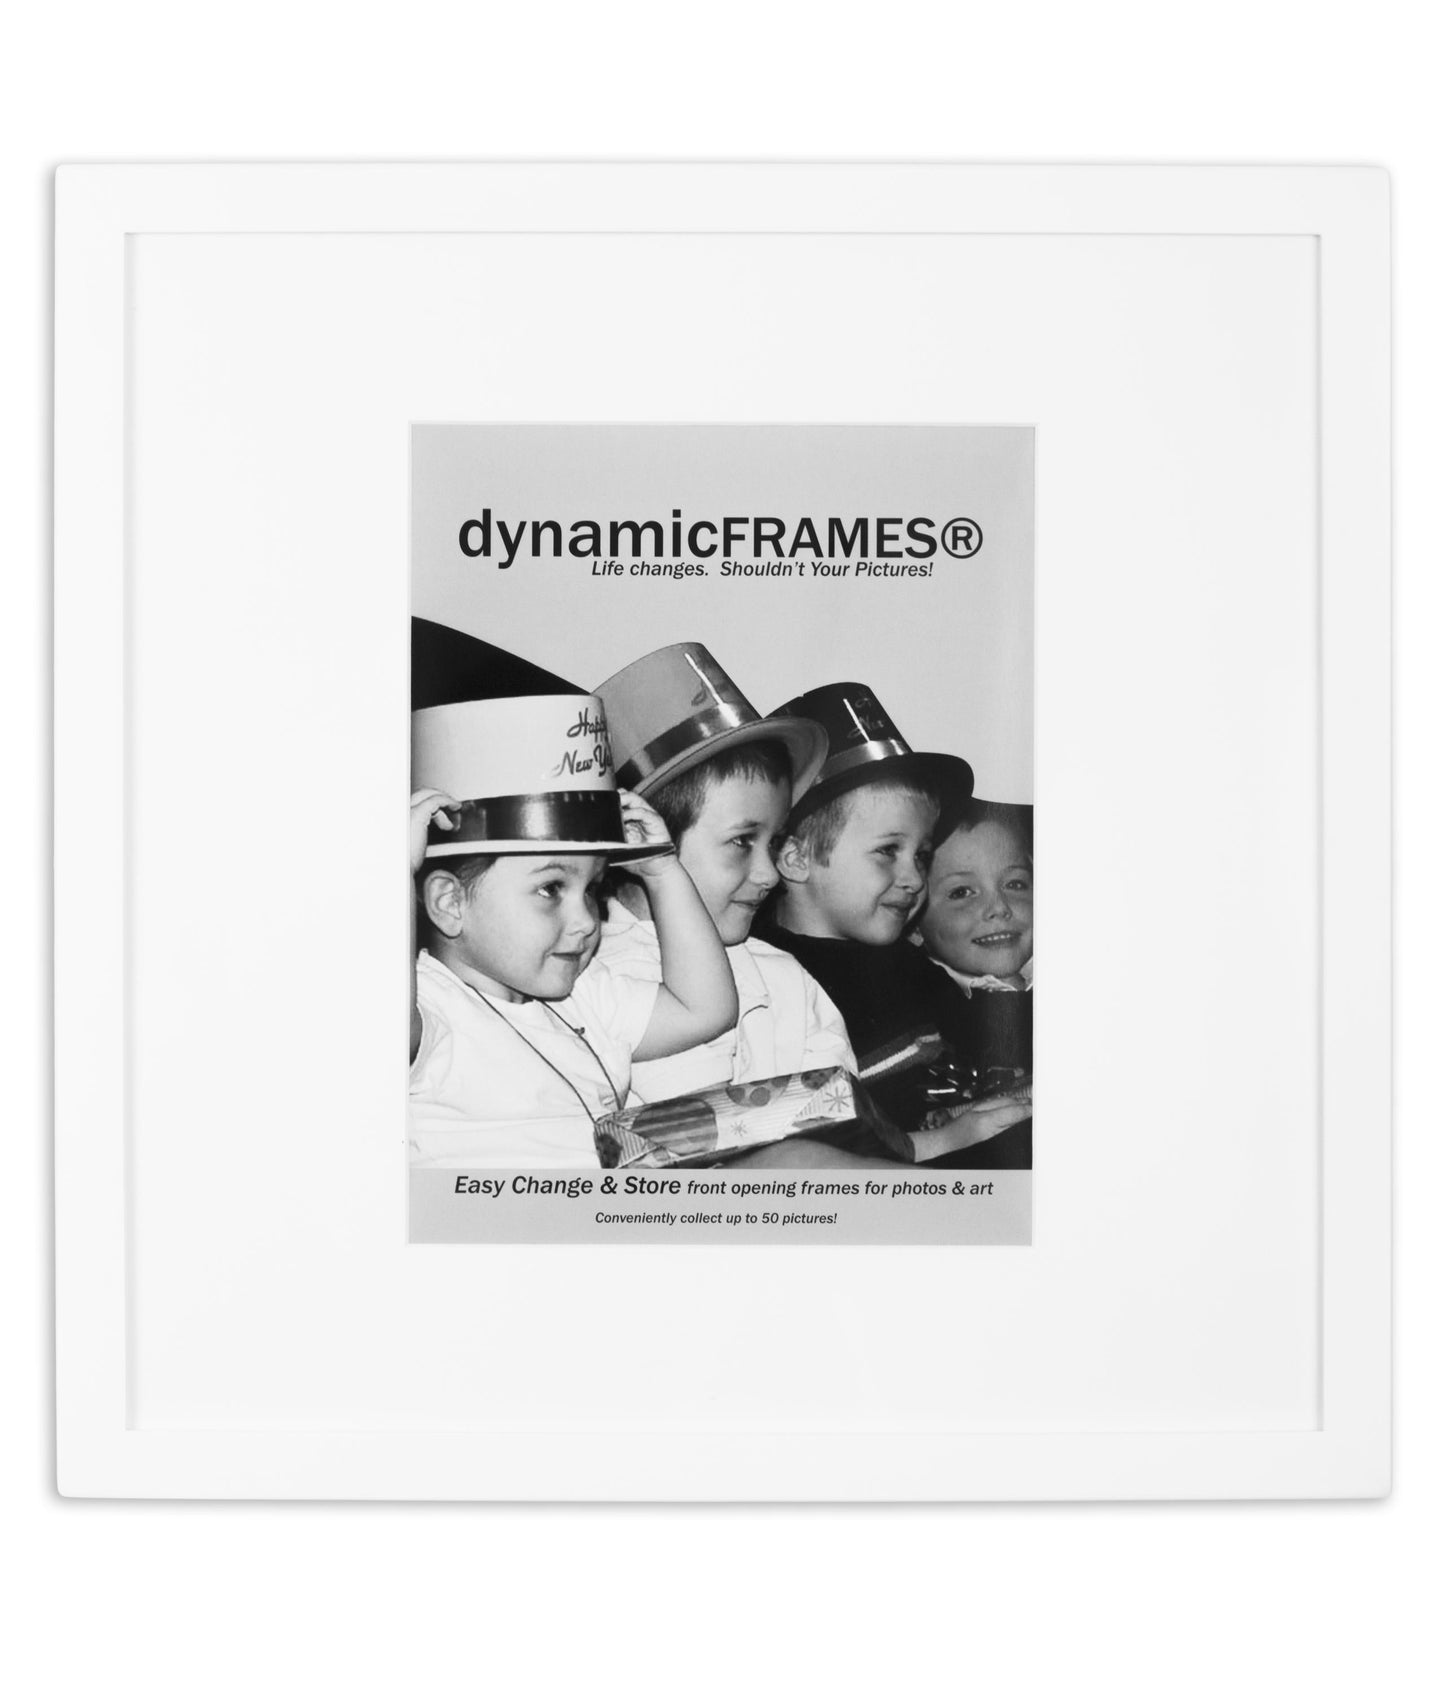 dynamicSQUARE for 8x10 prints & photos.